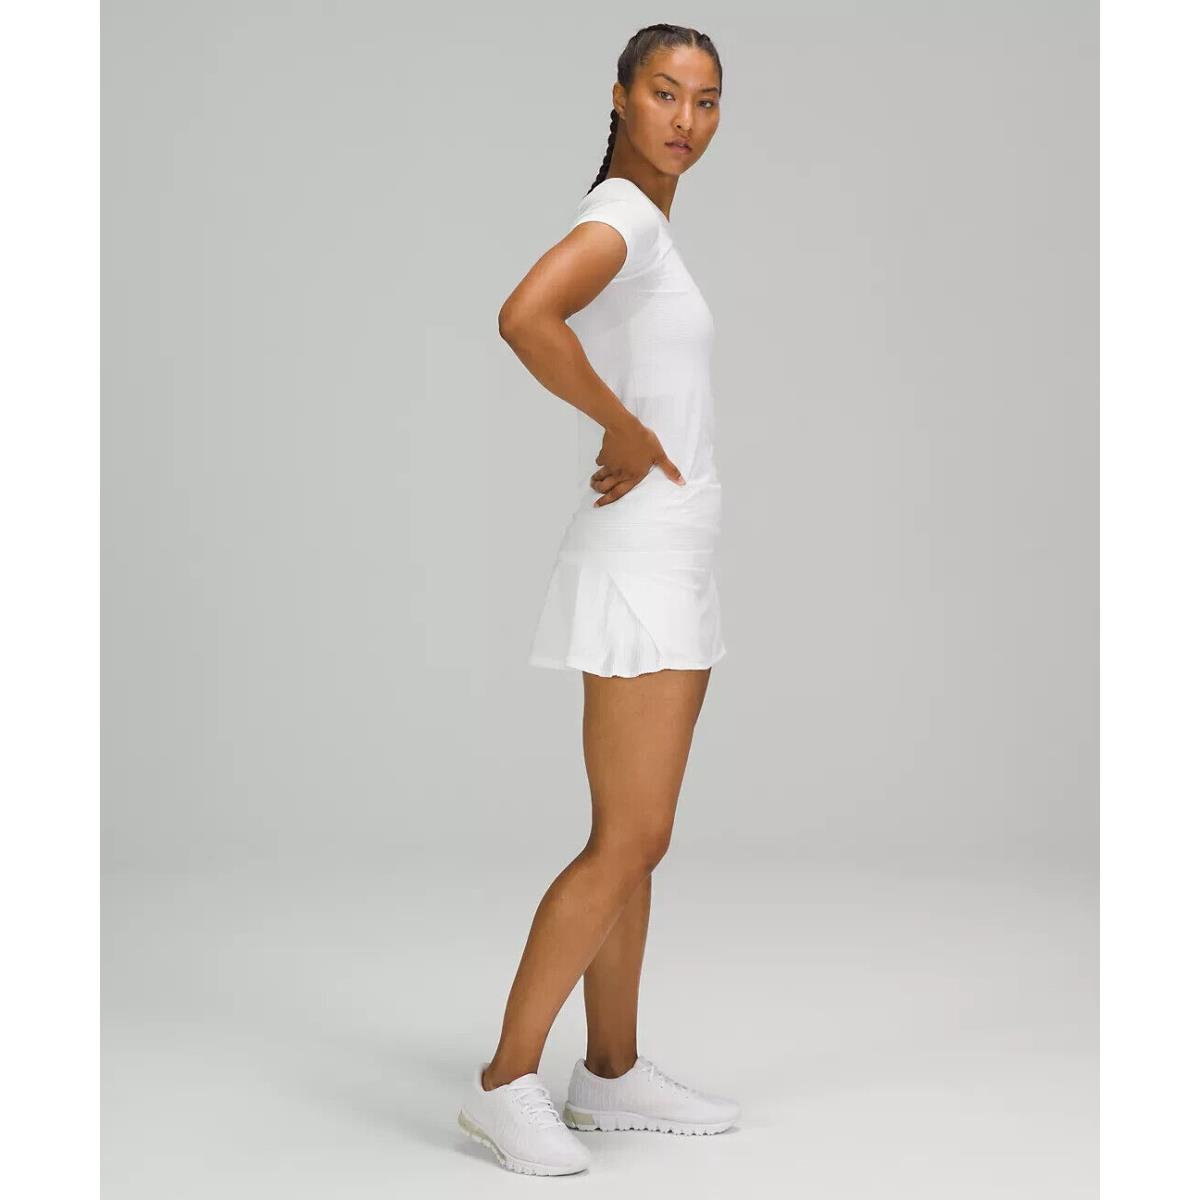 Lululemon Play Off The Pleats Skirt Size 8 White Tennis LW8842R